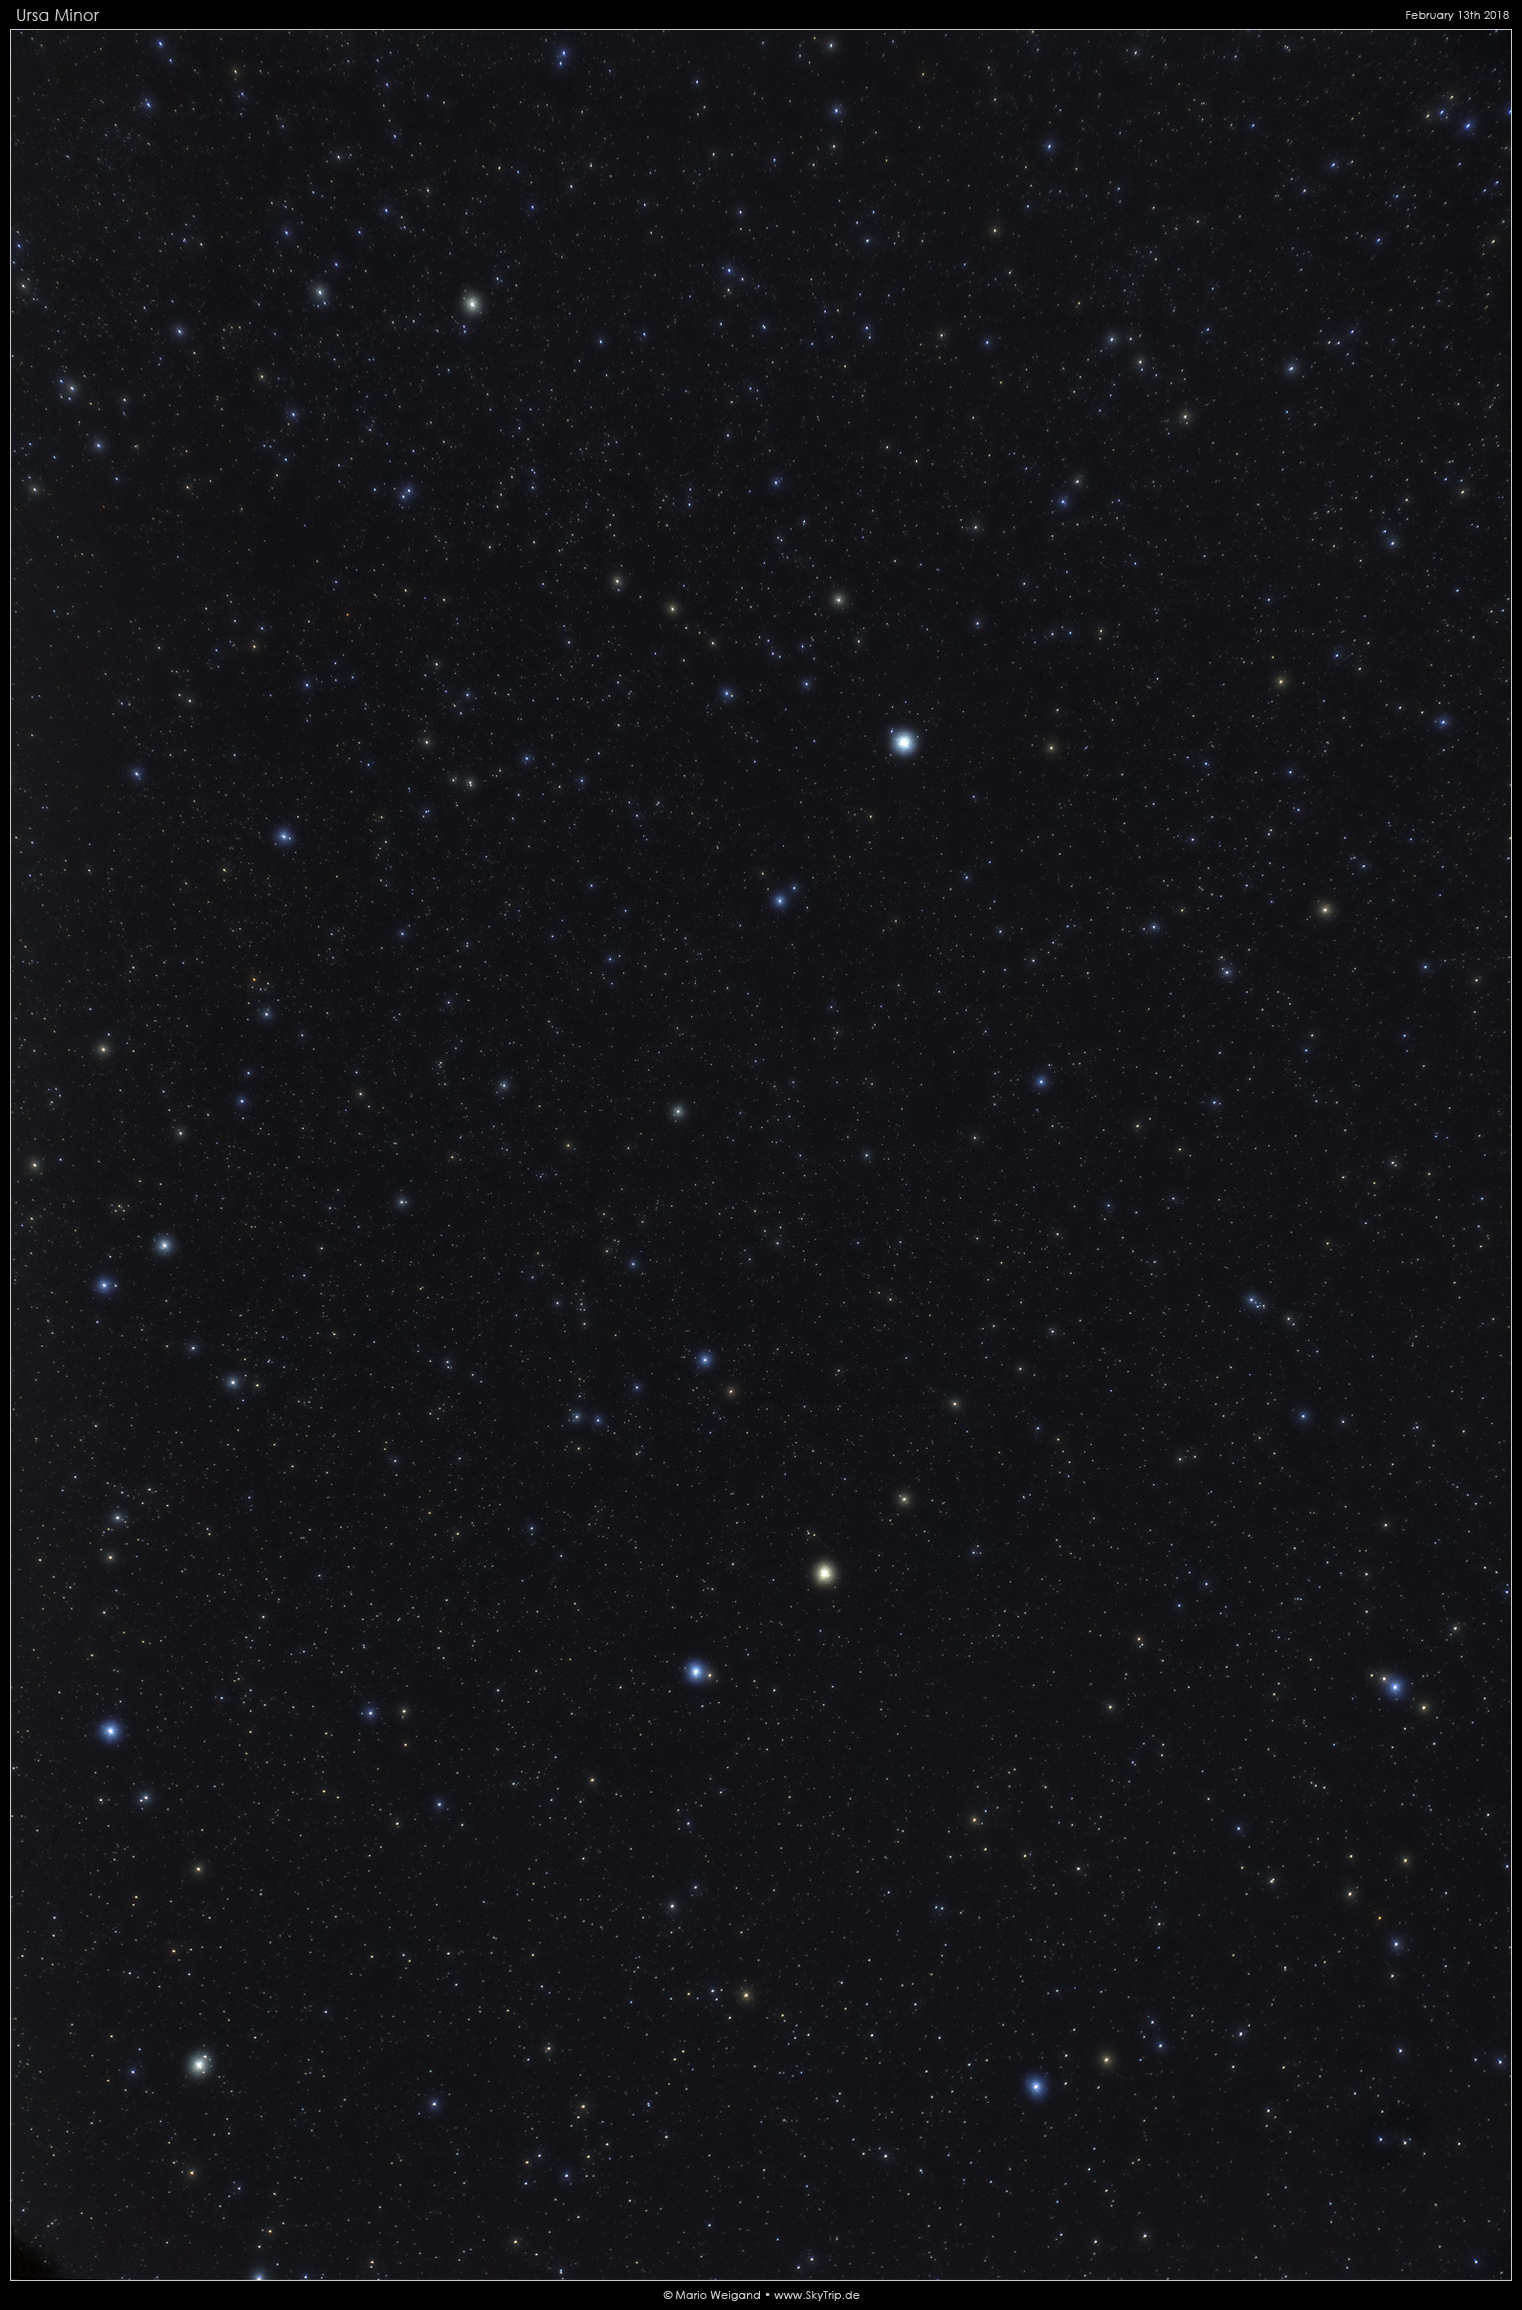 Sternbild Ursa Minor